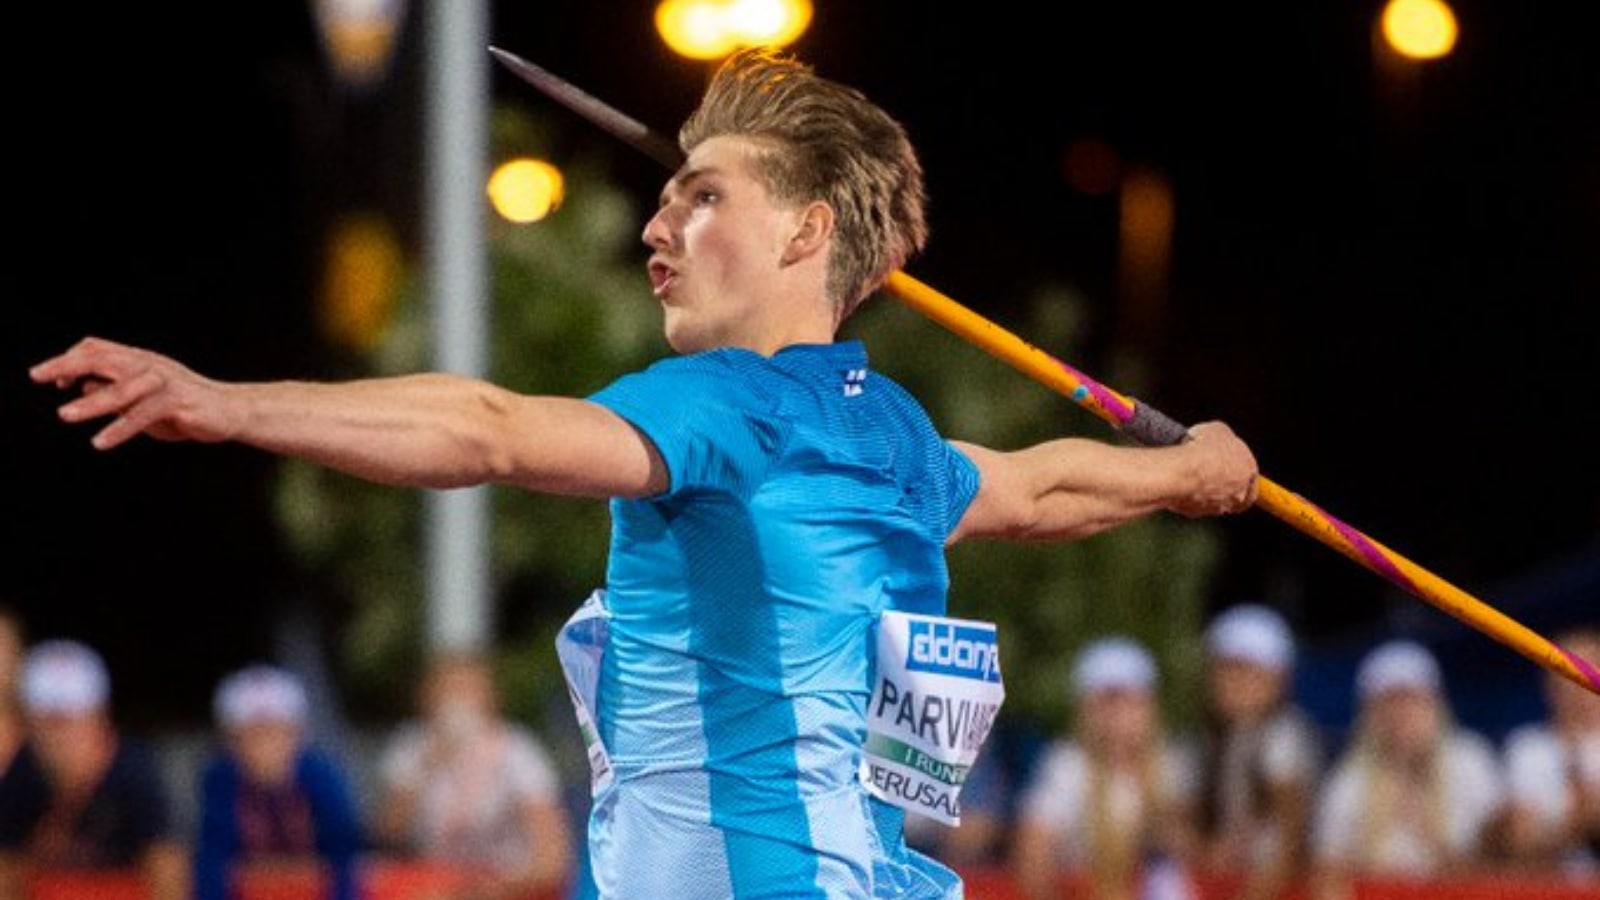 Finland’s Topi Parviainen set a new European U18 javelin throw record ...